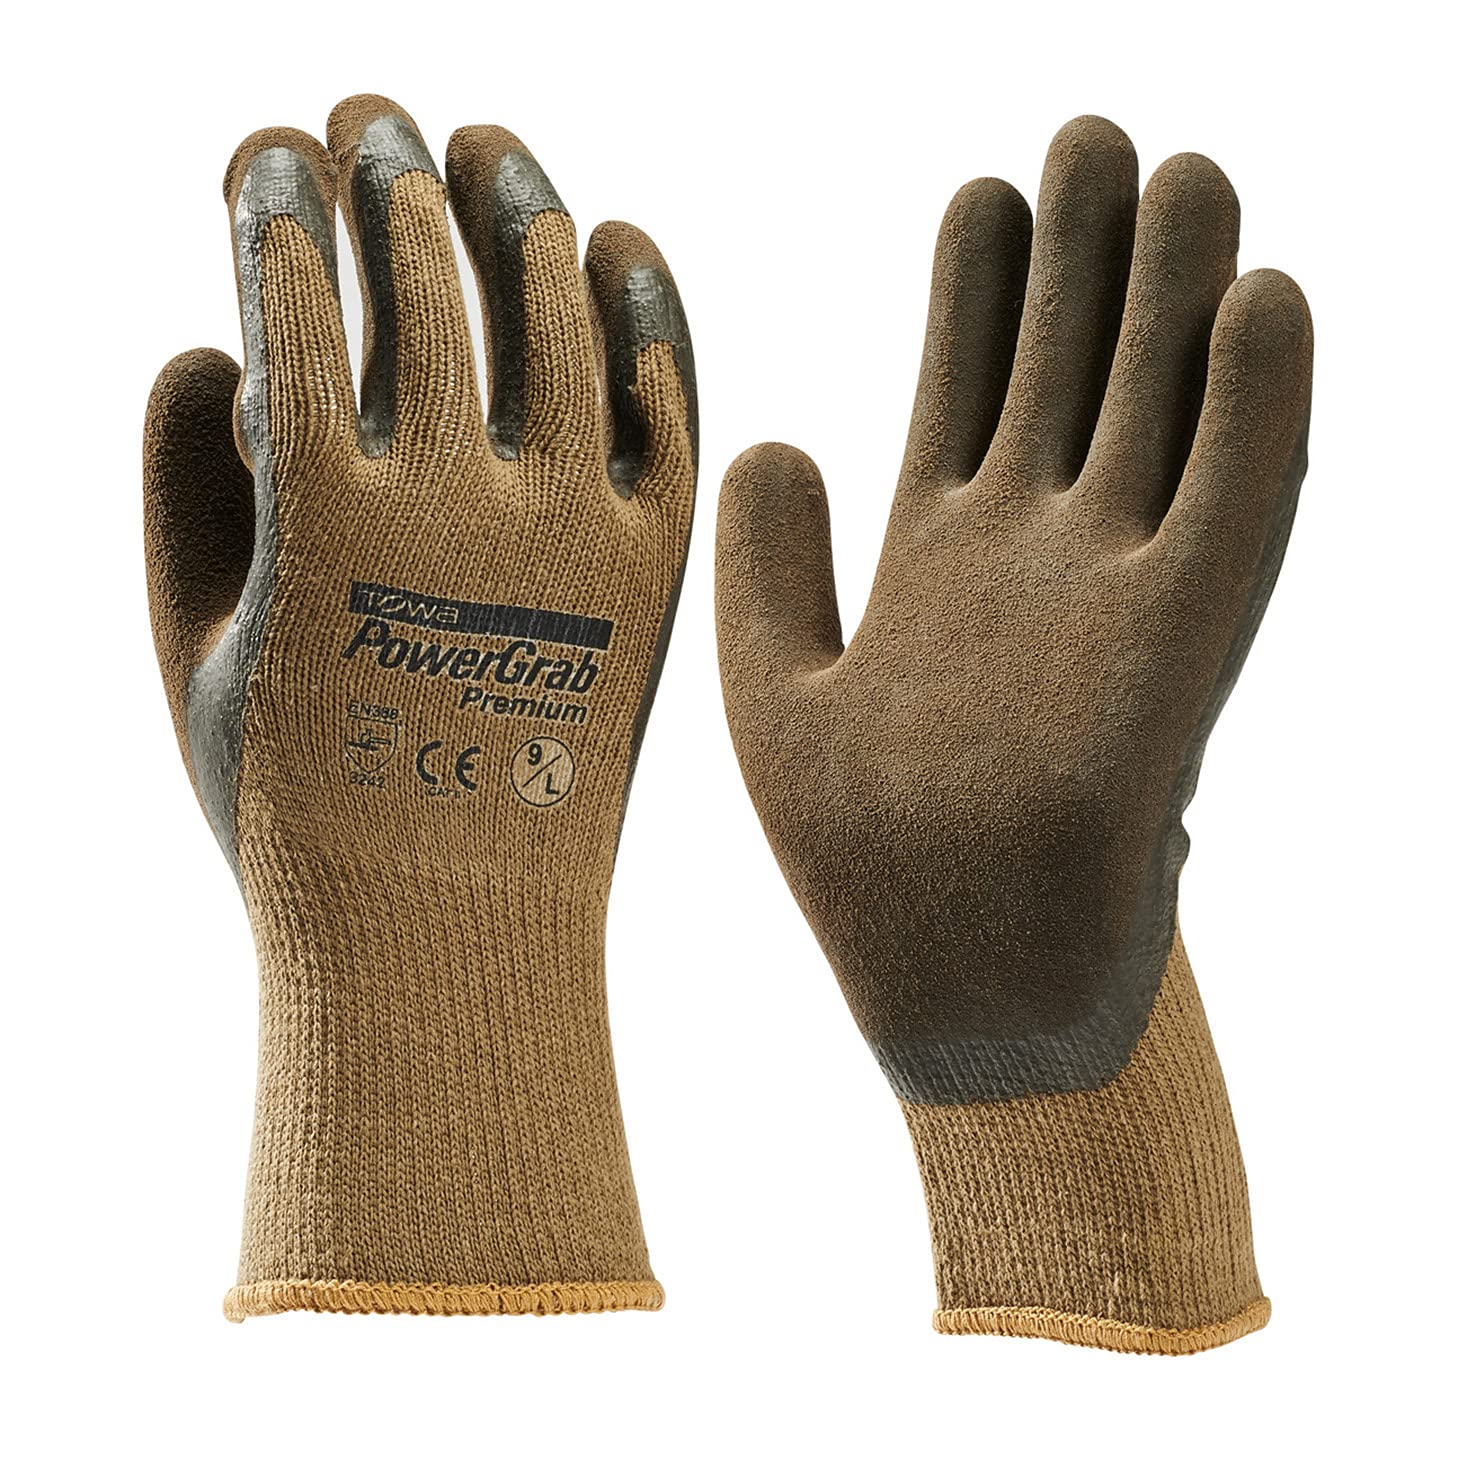 TOWA Power Grab Premium Arbeitshandschuhe Handschuhe Montagehandschuhe 12 Paar im Pack (10)